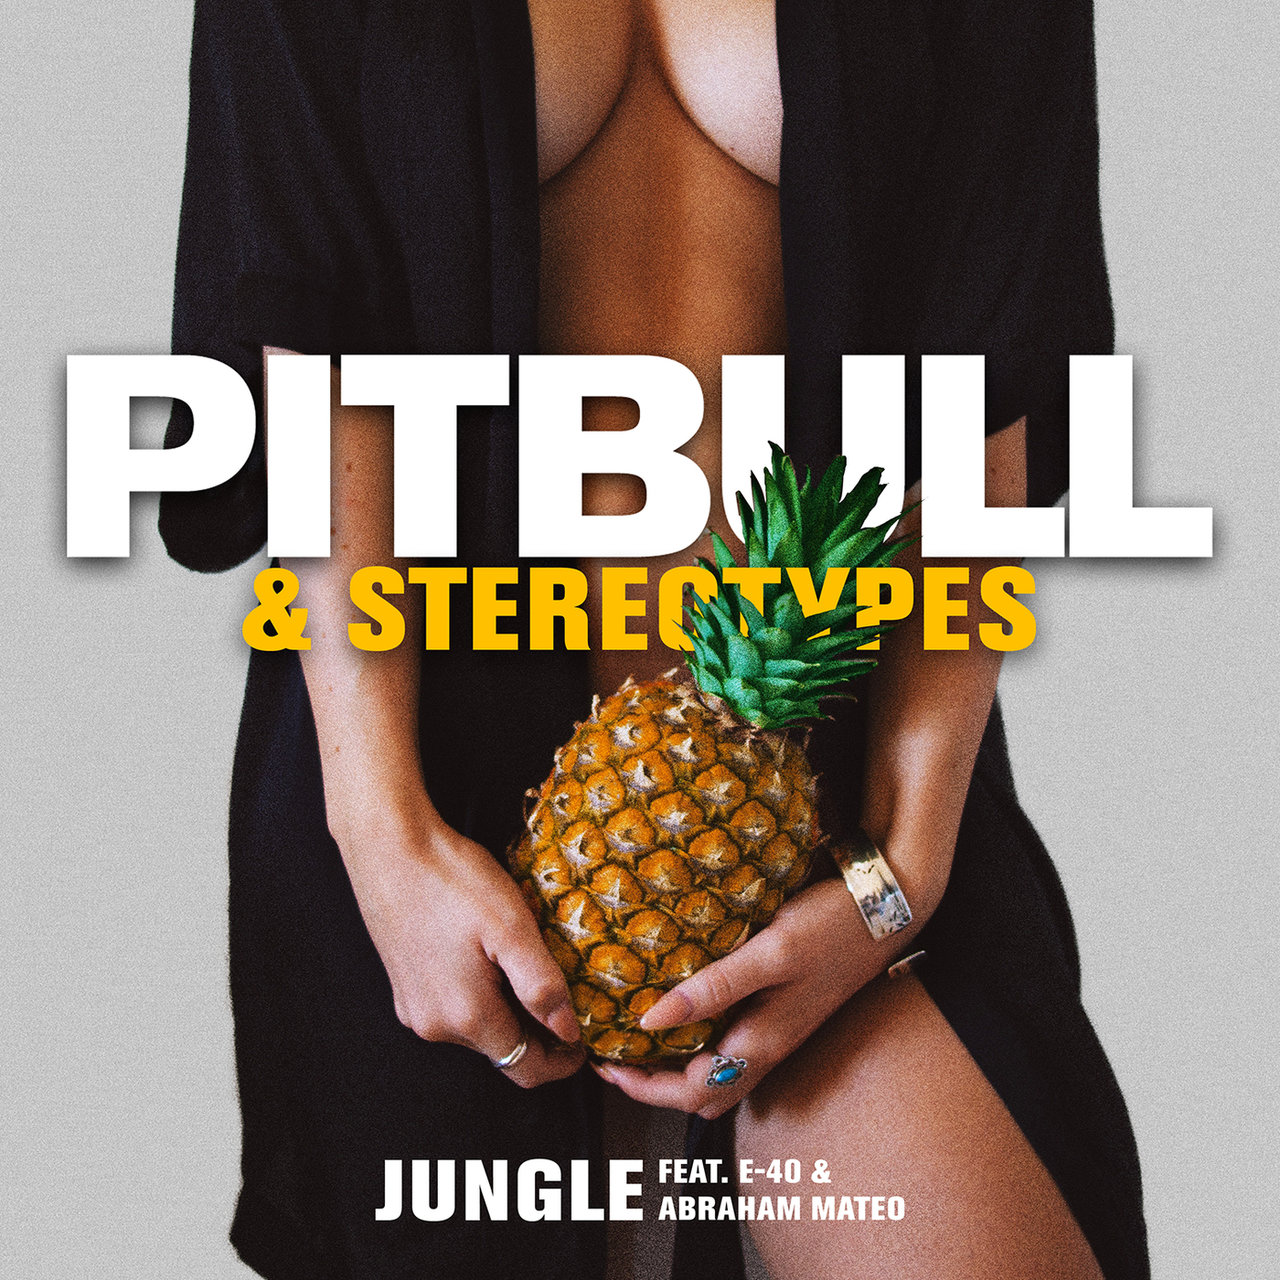 Pitbull & Stereotypes featuring E-40 & Abraham Mateo — Jungle cover artwork